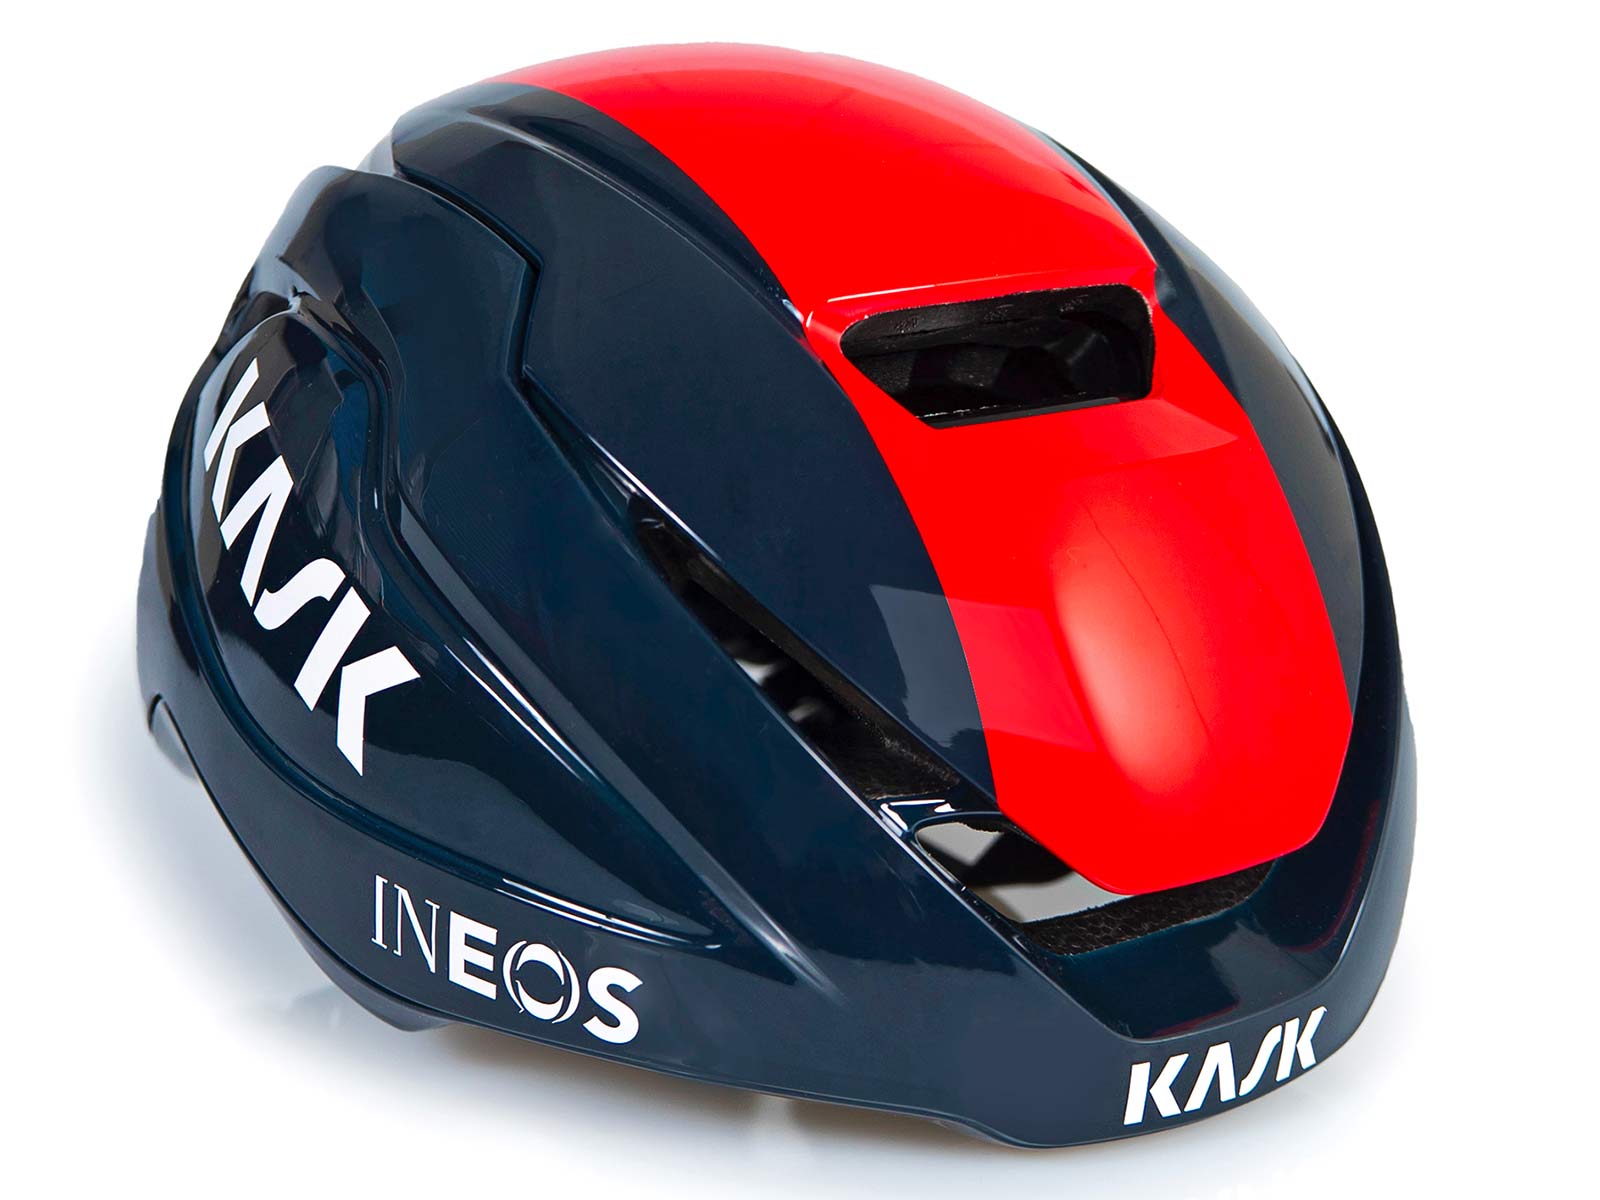 Kask-Wasabi-aero-road-helmet_adjustable-venting-aerodynamics-merino-padding_Ineos-Grenadiers-edition-angled.jpg